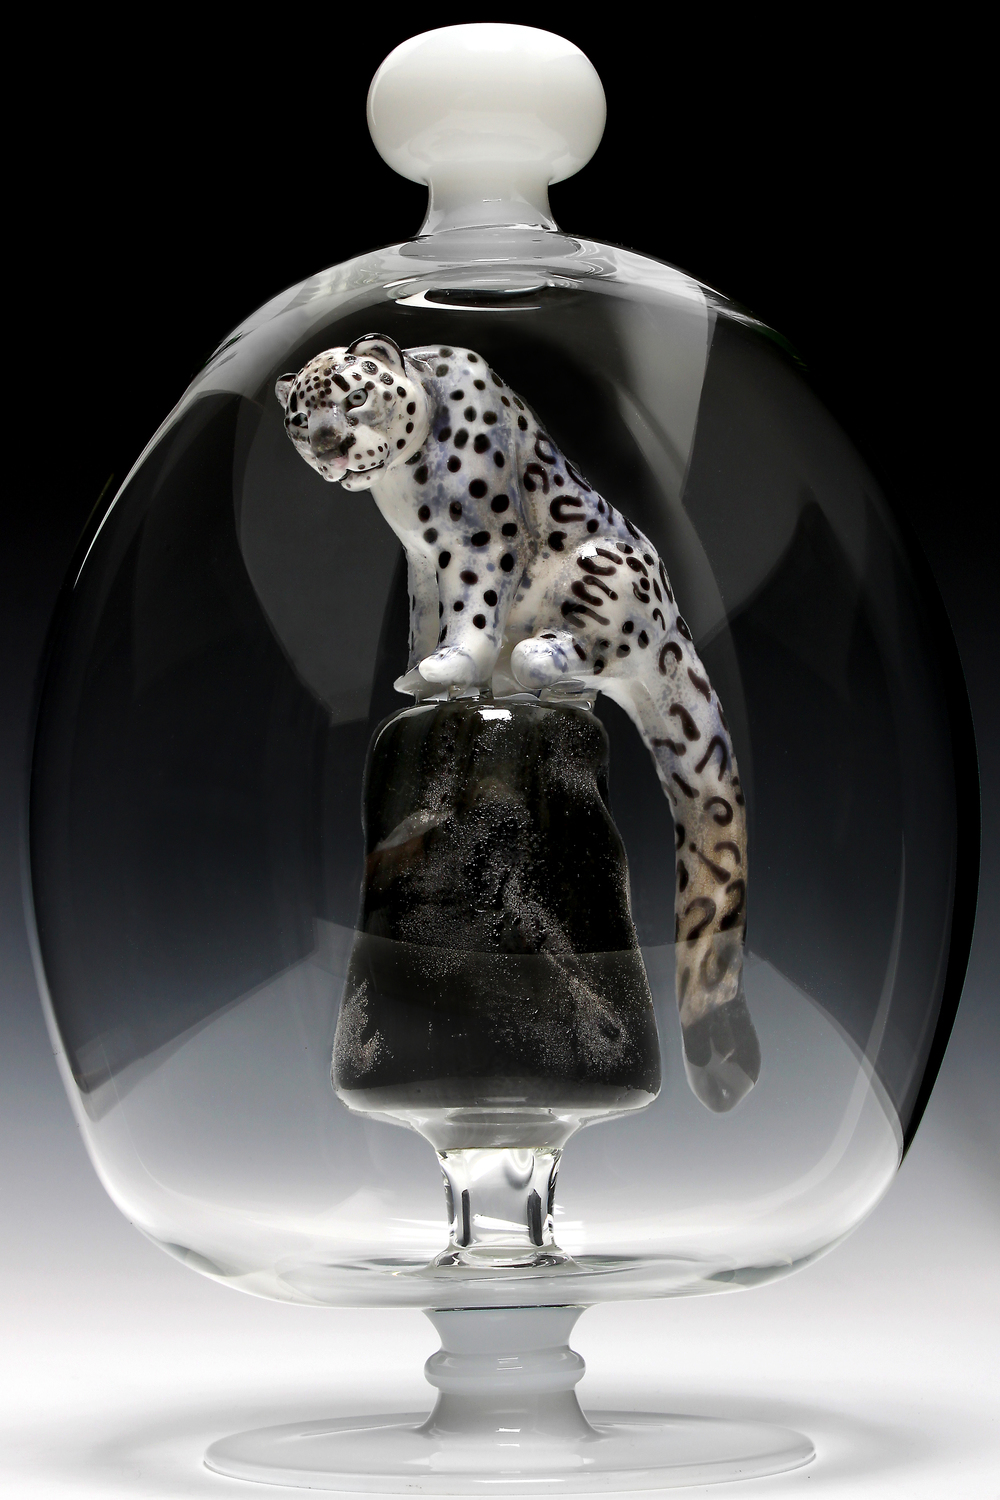 Kiva Ford, "Snow Leopard Bottle", Courtesy of gallery